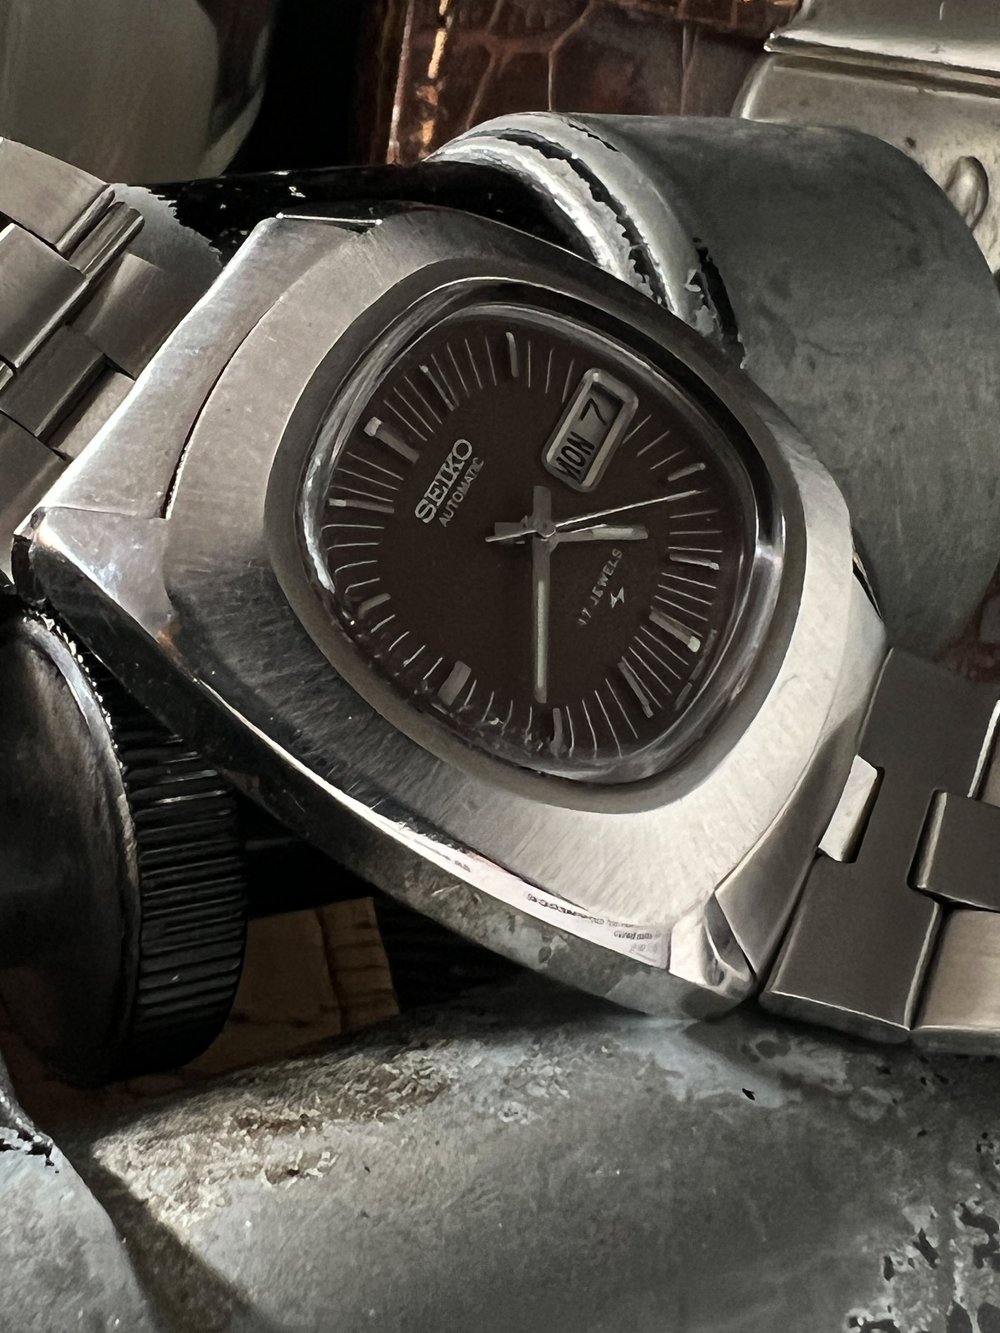 Seiko Big 7006-5009 70's — Cool Vintage Watches